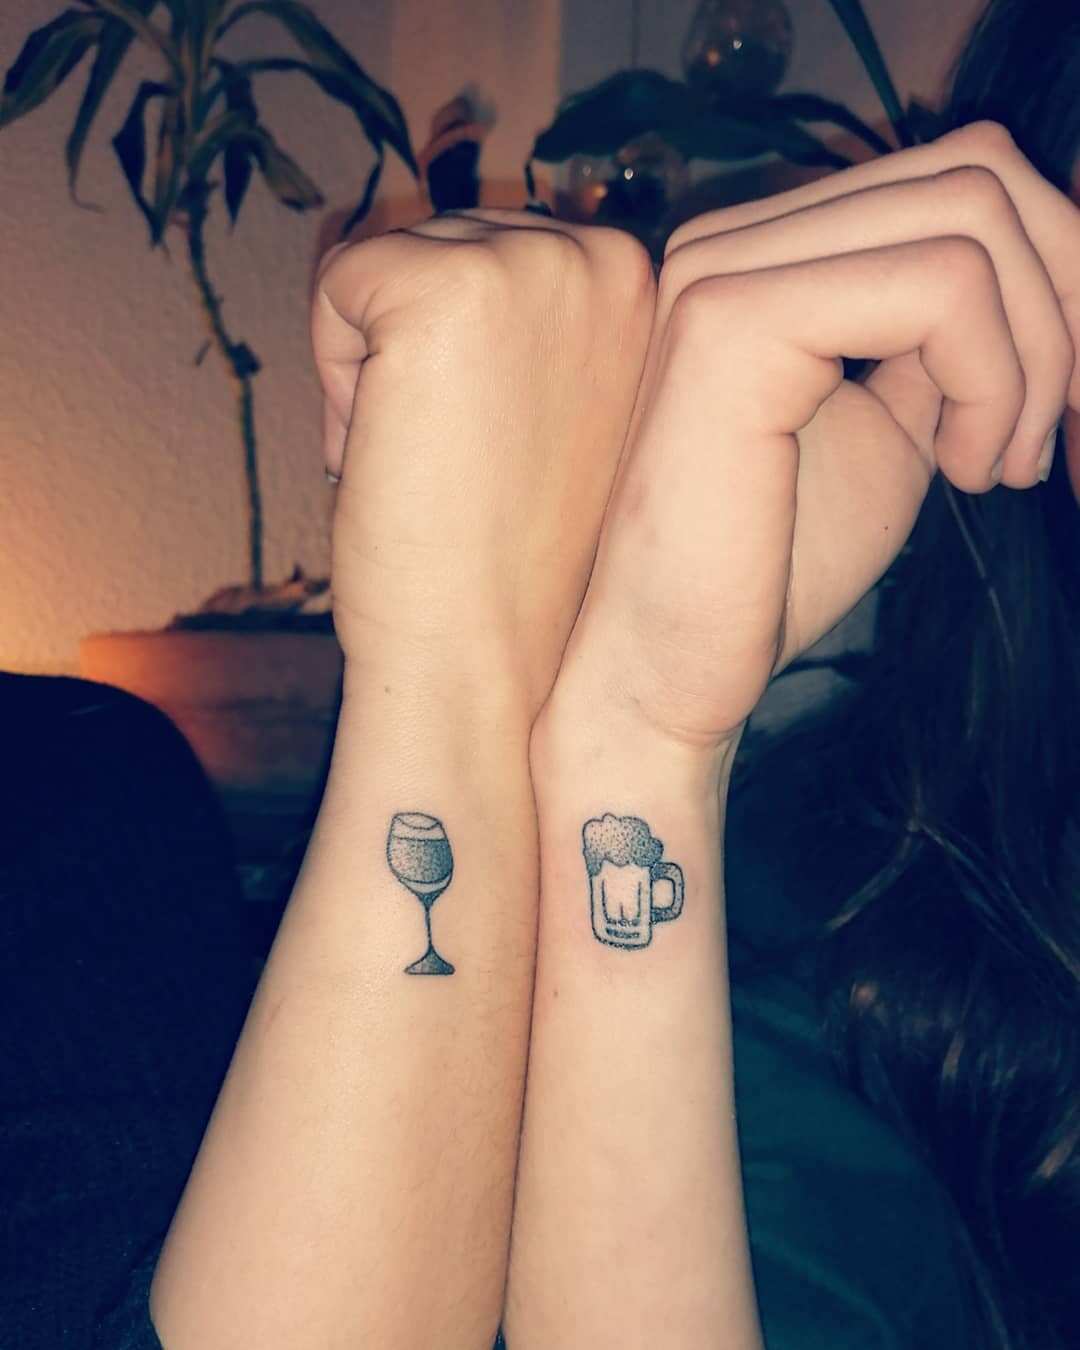 Cute friendship tattoos 🖤 @nicole__de__sousa @stephanie.giardino  #friendshiptattoo #avocadotattoo #bestfriendtattoos #smalltattoo ... |  Instagram